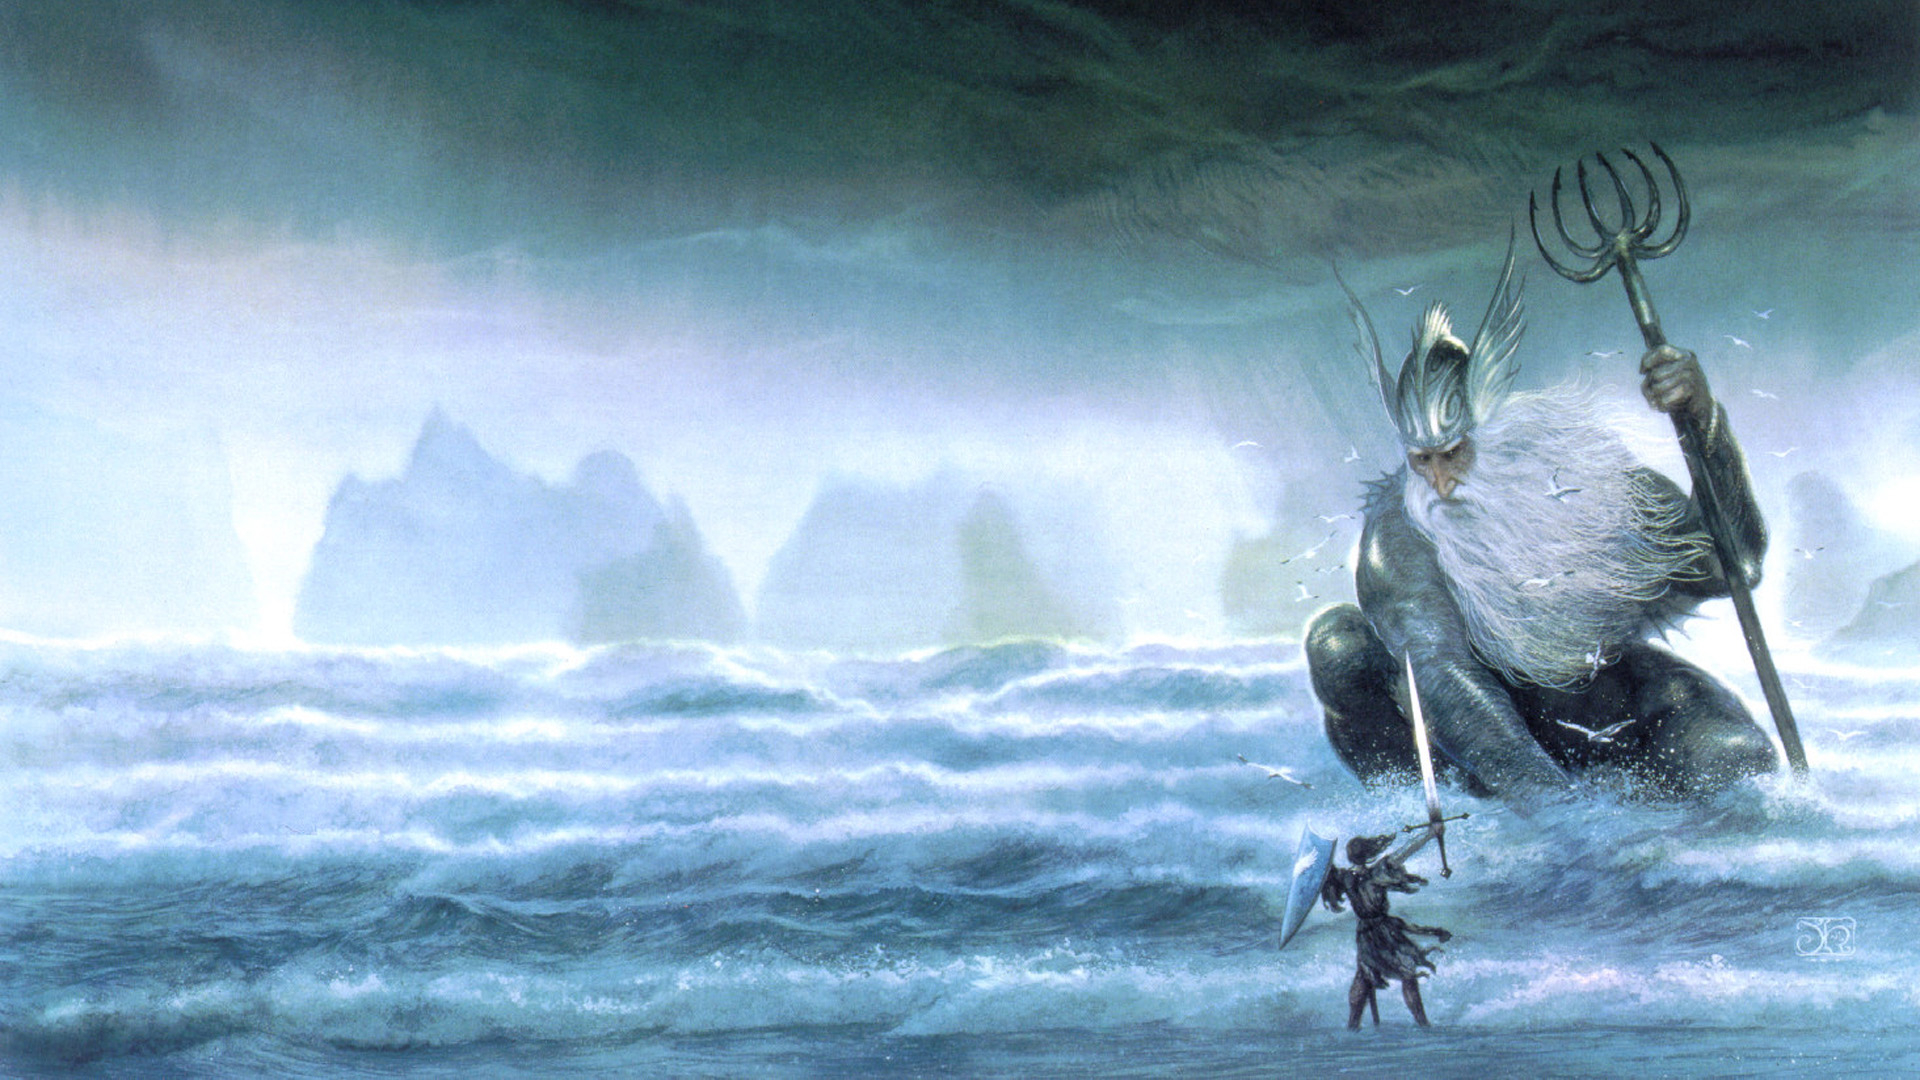 1920x1080 Wallpaper : fantasy art, sea, vehicle, artwork, J R R Tolkien, ghost ship, John Howe, The Silmarillion, ocean, screenshot, computer wallpaper, wind wave nikolaslimao 259703 HD Wallpapers